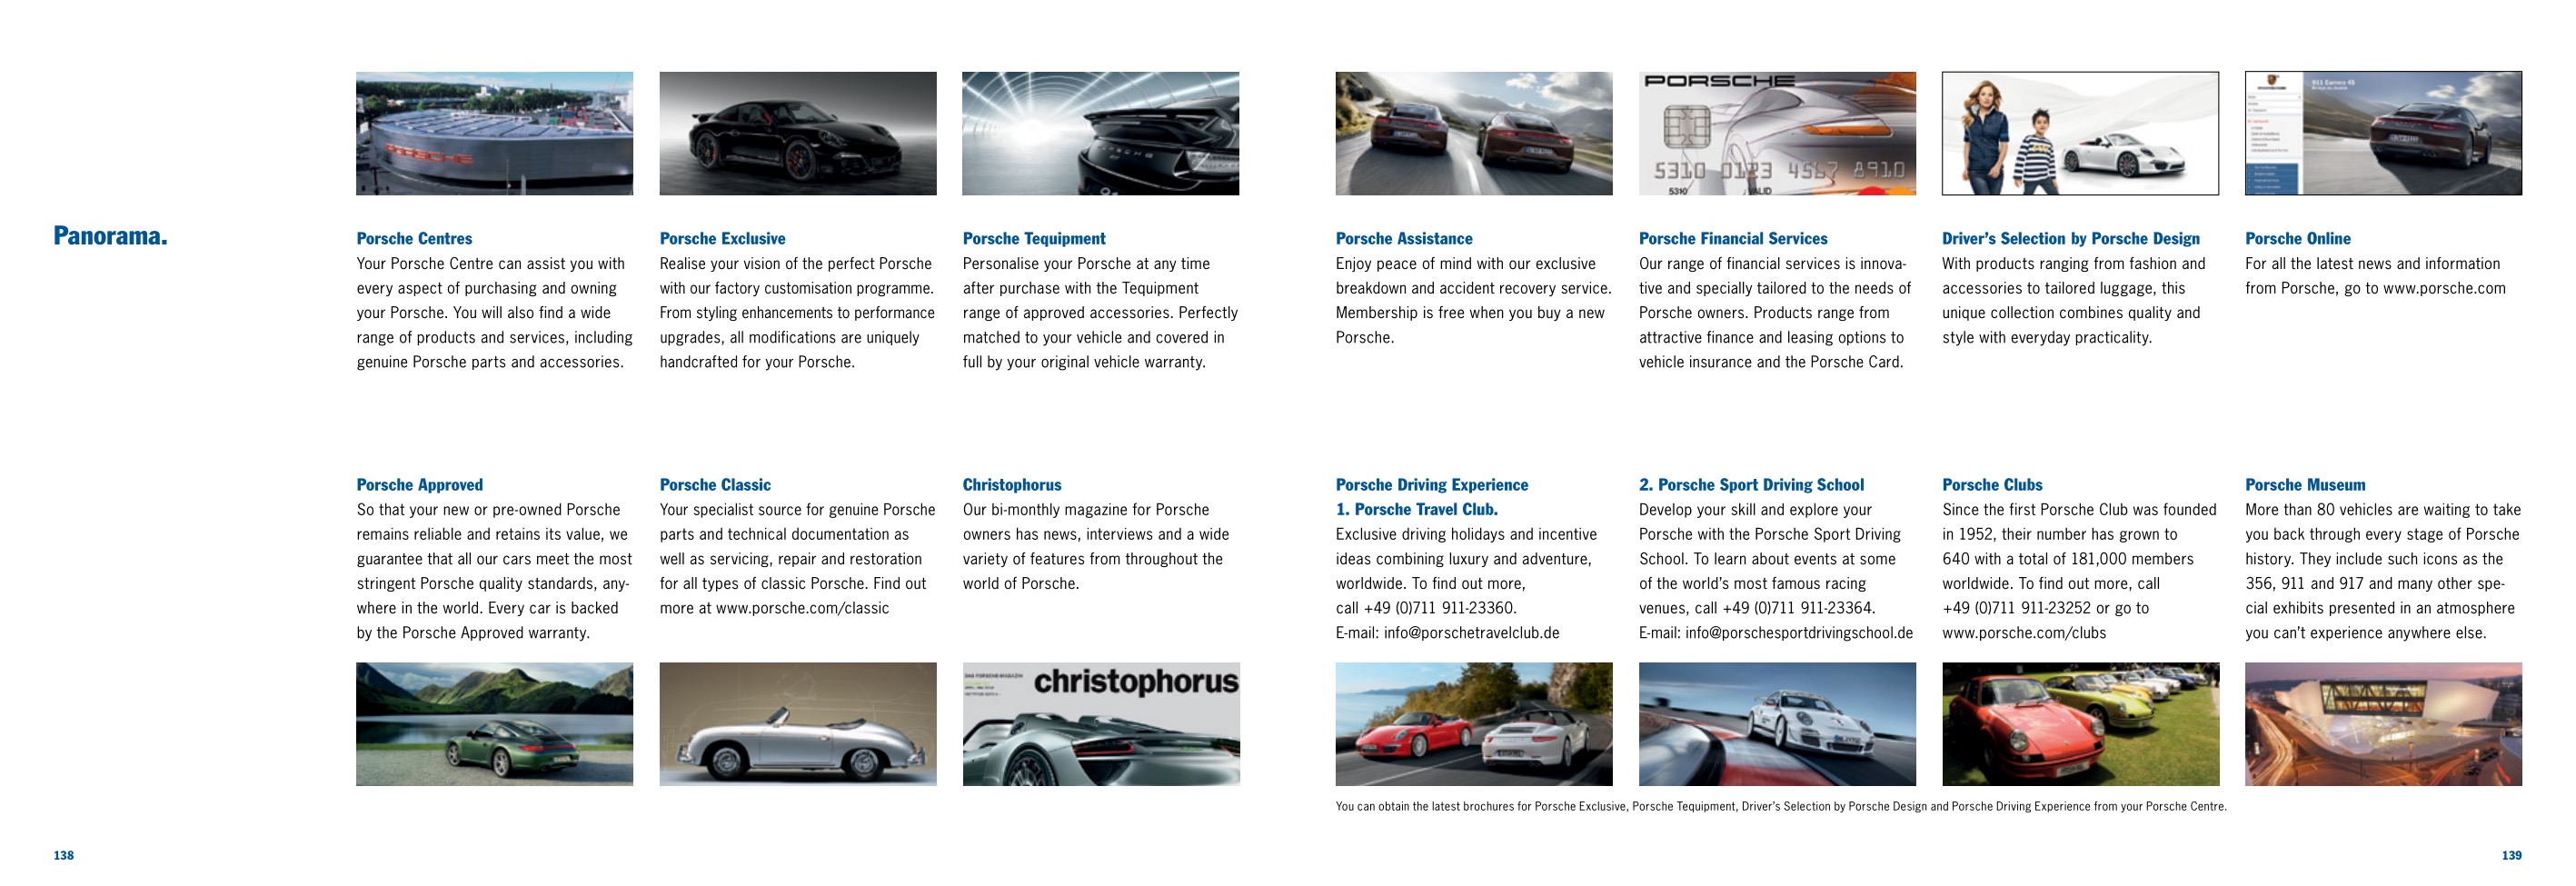 2014 Porsche 911 Brochure Page 58